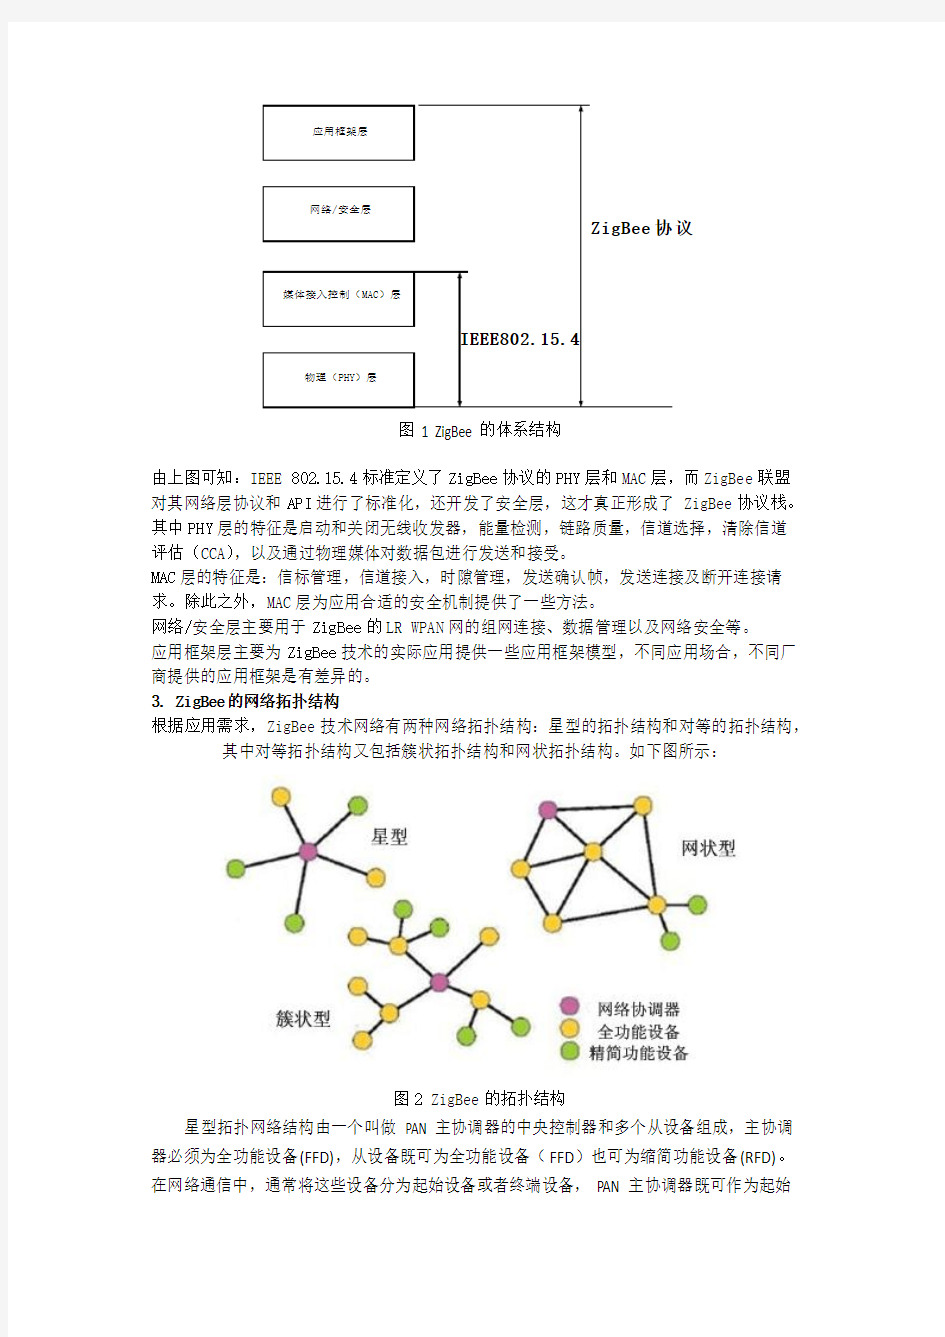 zigbee的系统结构和组网方式